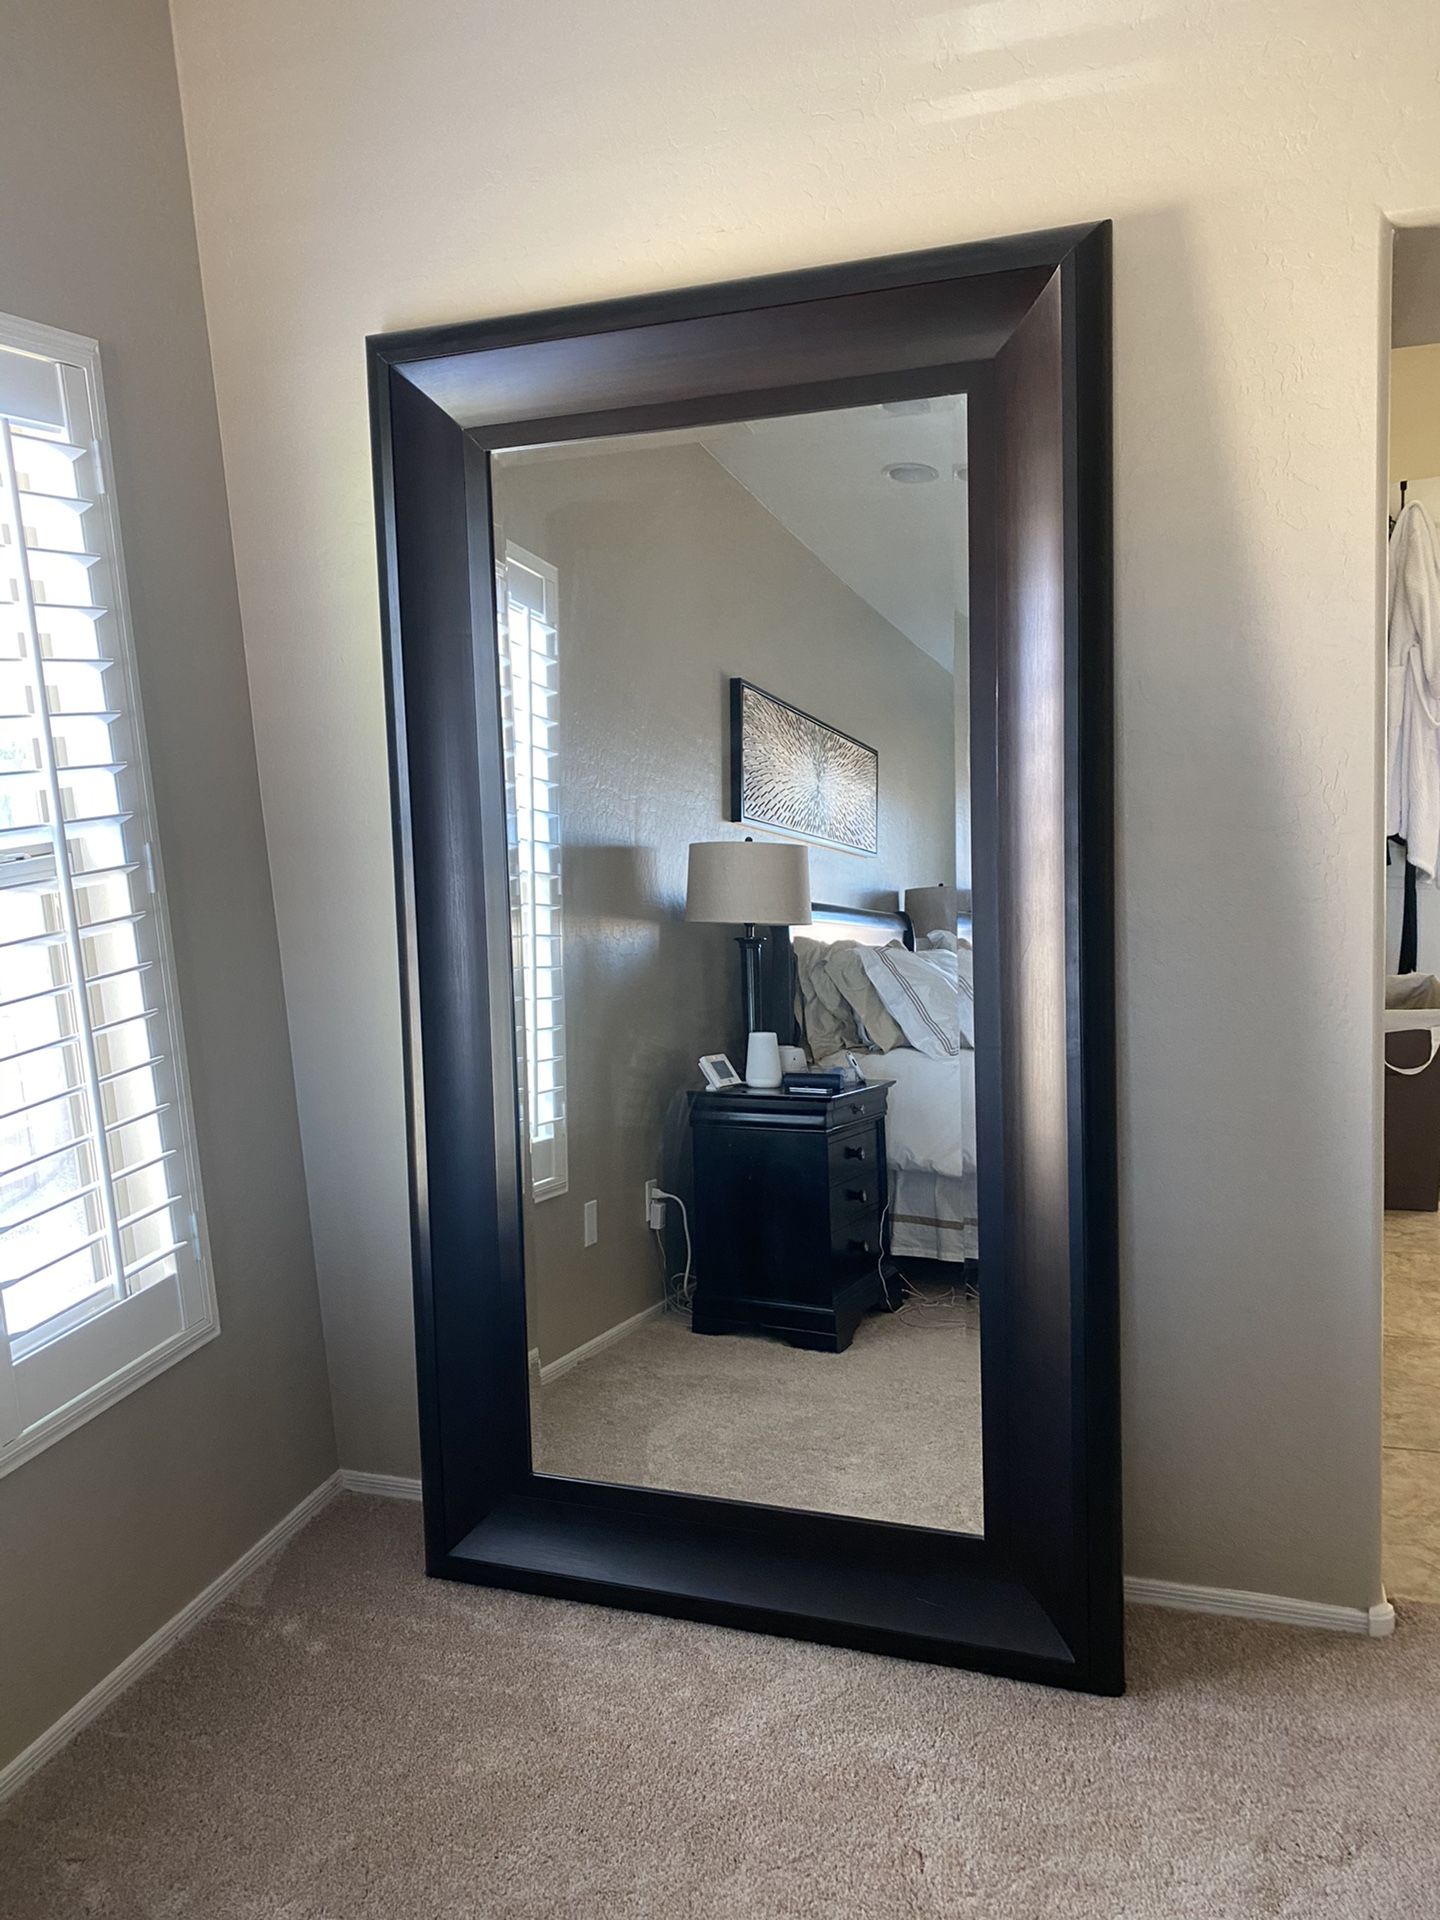 Large leaner/ floor mirror